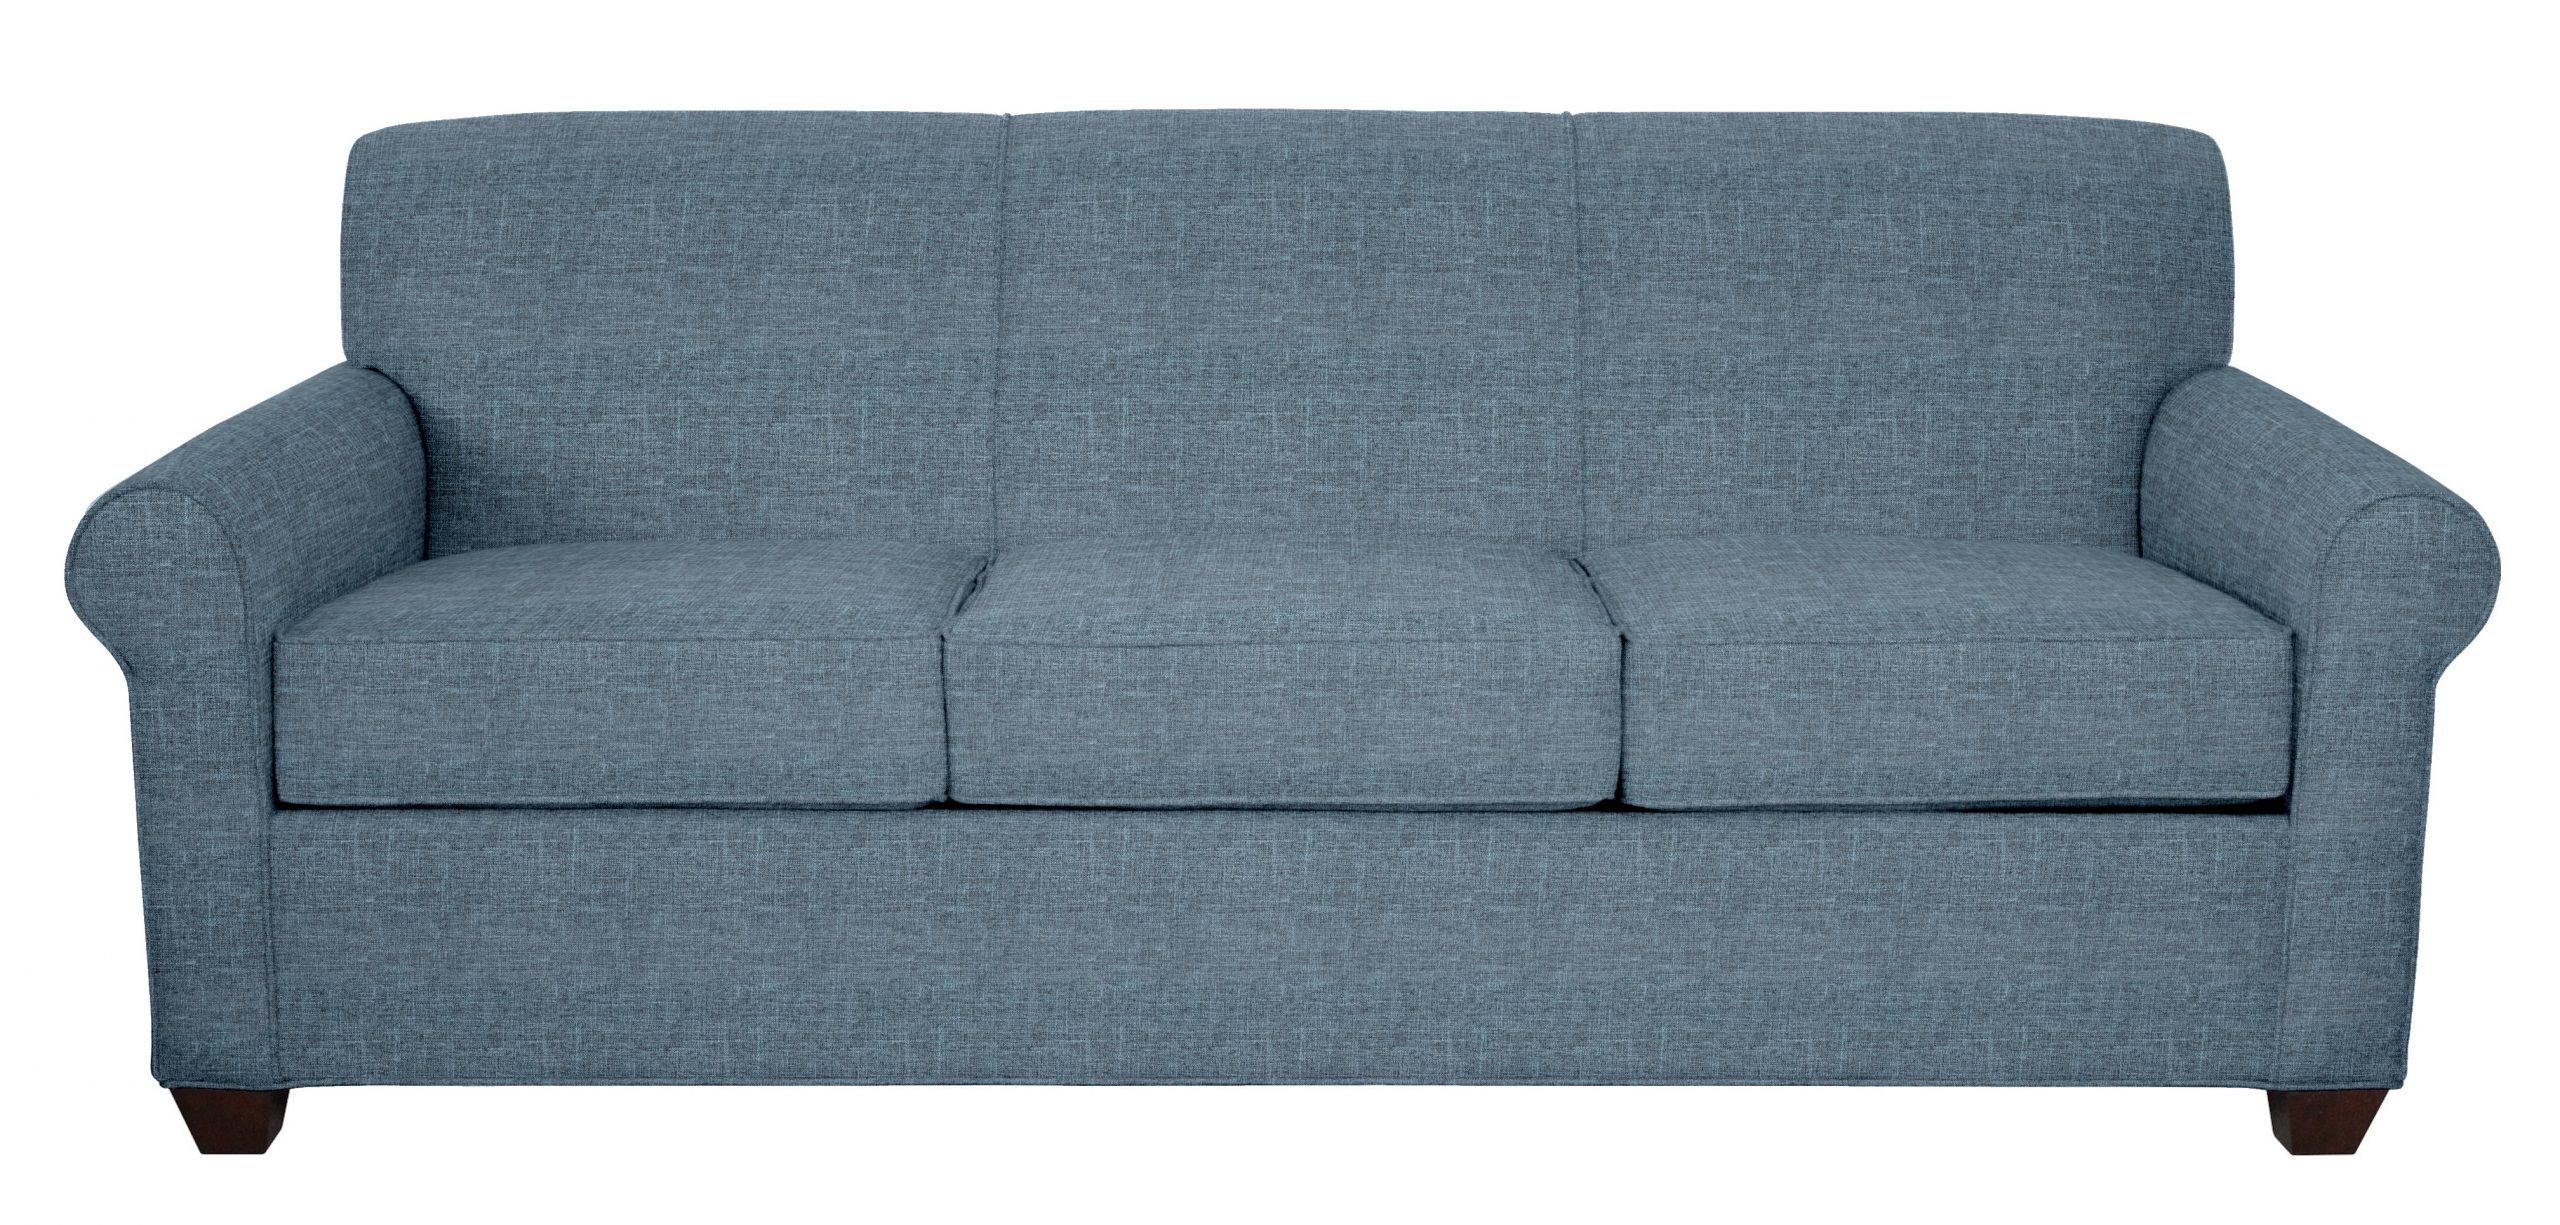 edgecombe furniture grace sofa bed